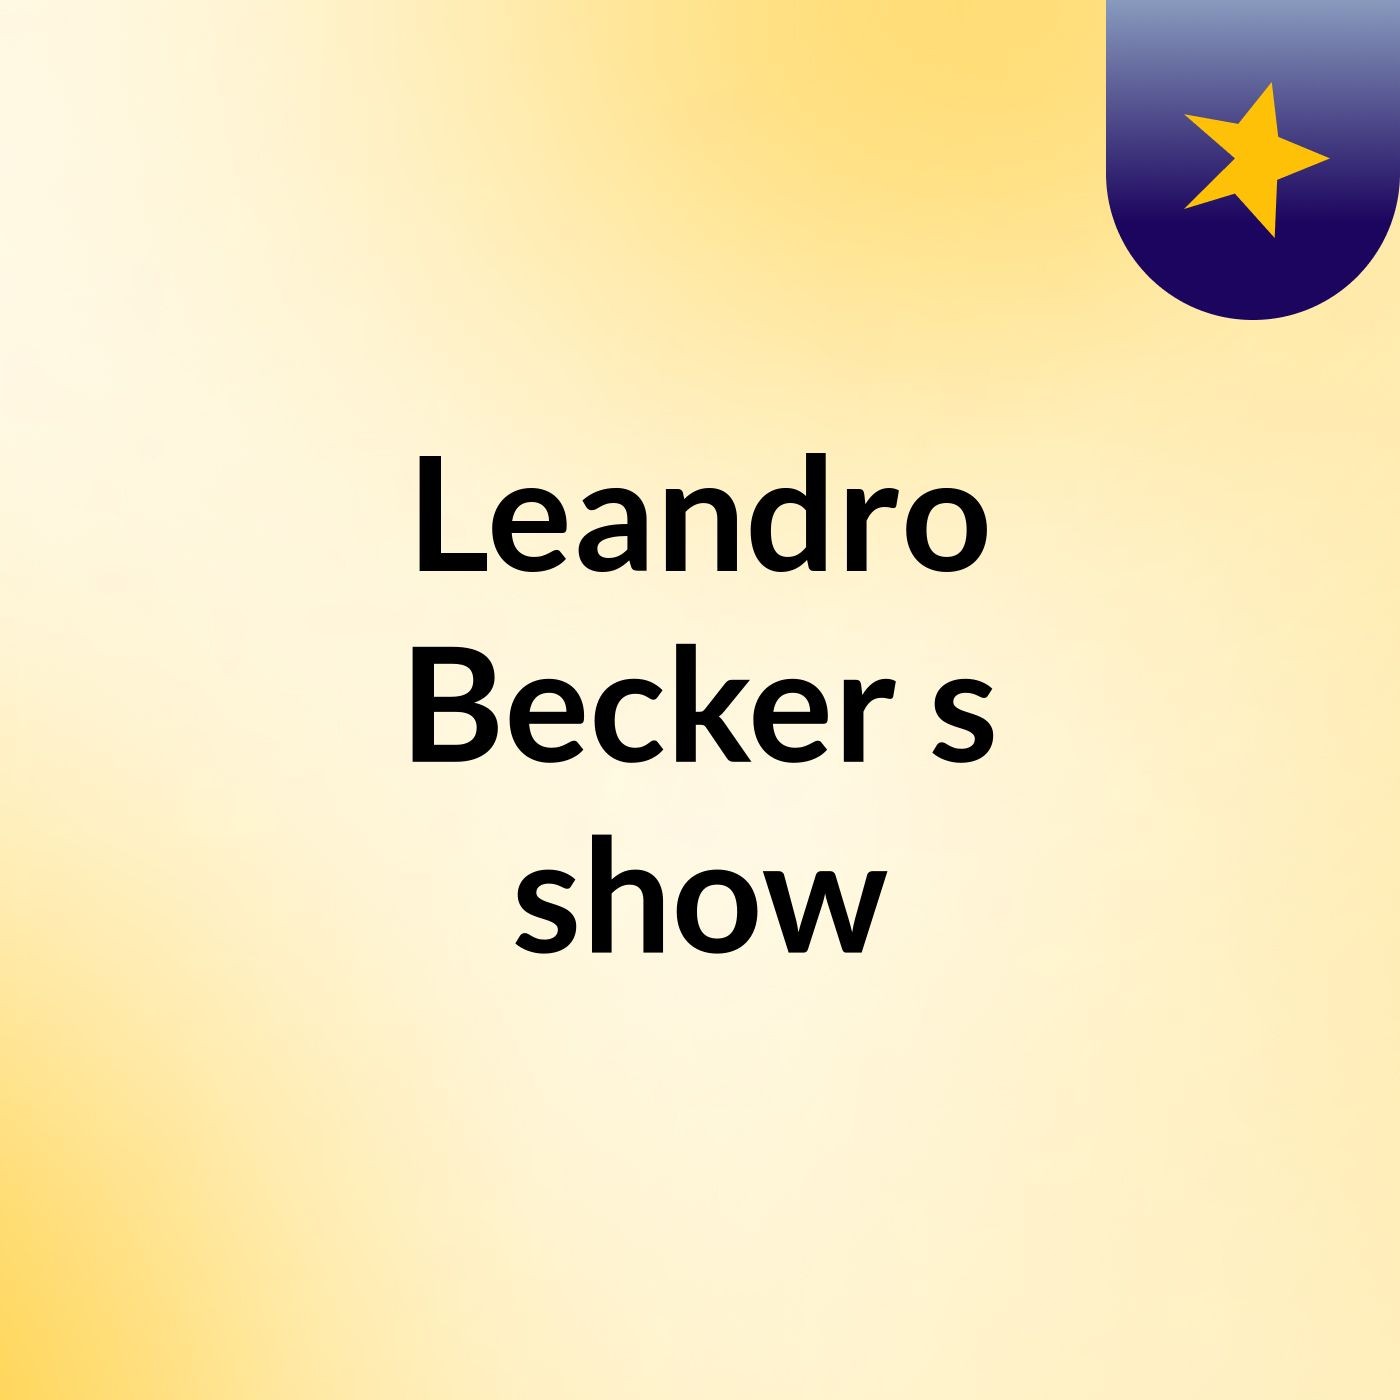 Leandro Becker's show